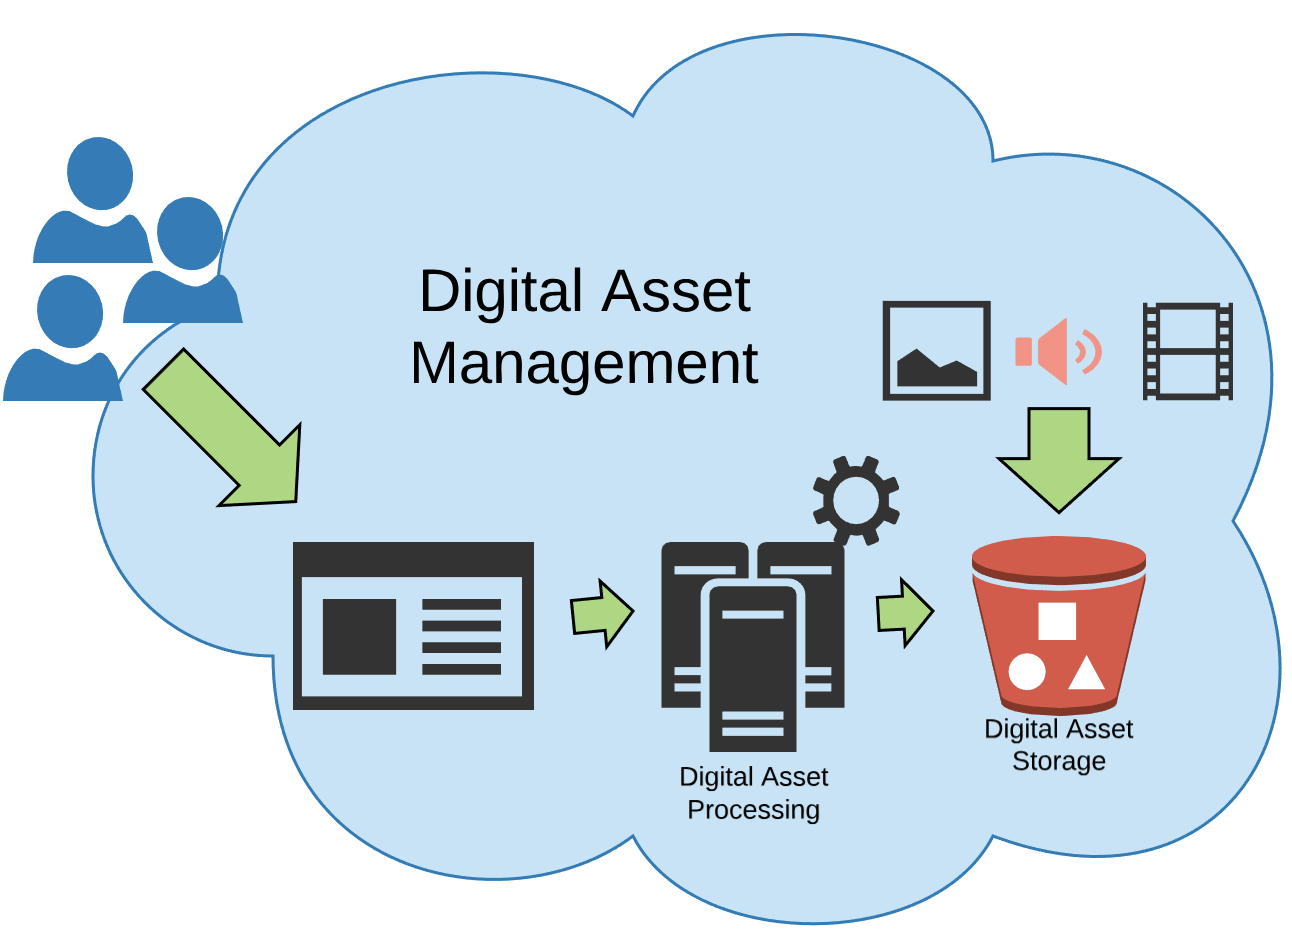 Digital Asset Management Market 2019 Global Insights and Outlook – Adobe, Cognizant Technology Solutions, Dell EMC, HP, IBM, ADAM Software, Adgistics